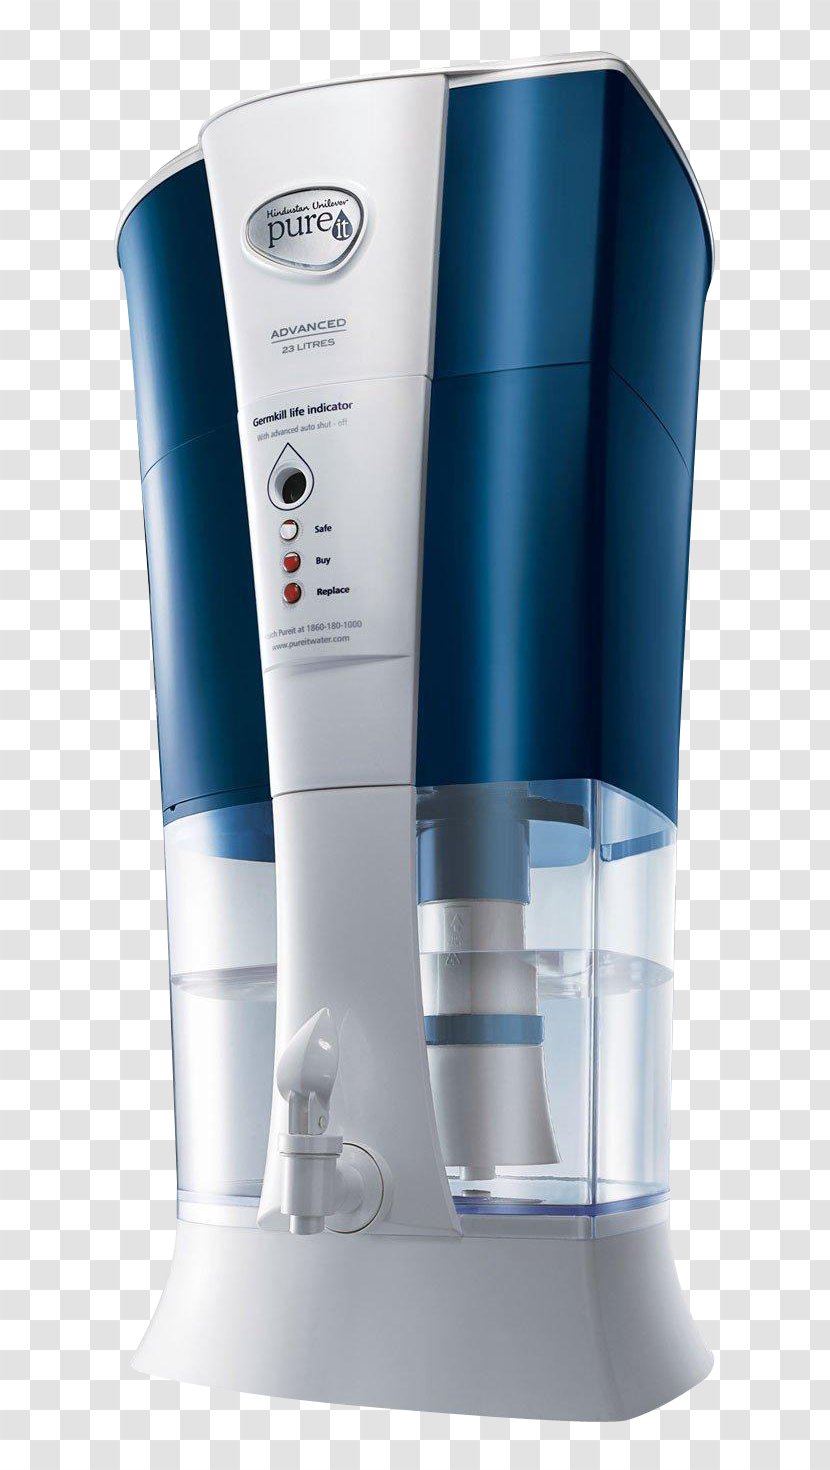 Pureit Water Purification Tata Swach Hindustan Unilever Eureka Forbes - Small Appliance - Purifier Transparent PNG